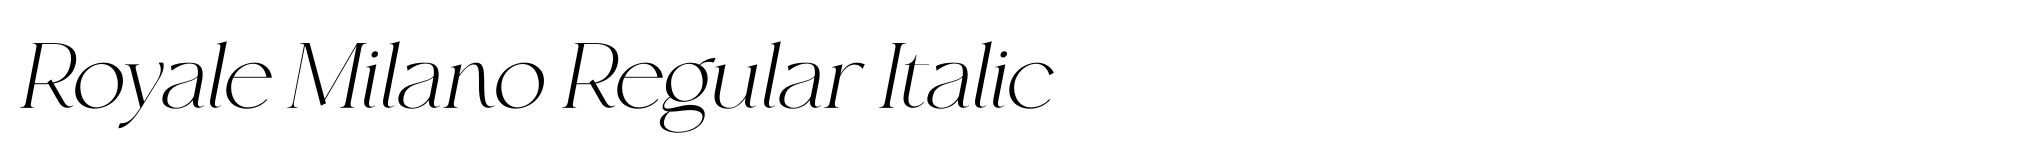 Royale Milano Regular Italic image